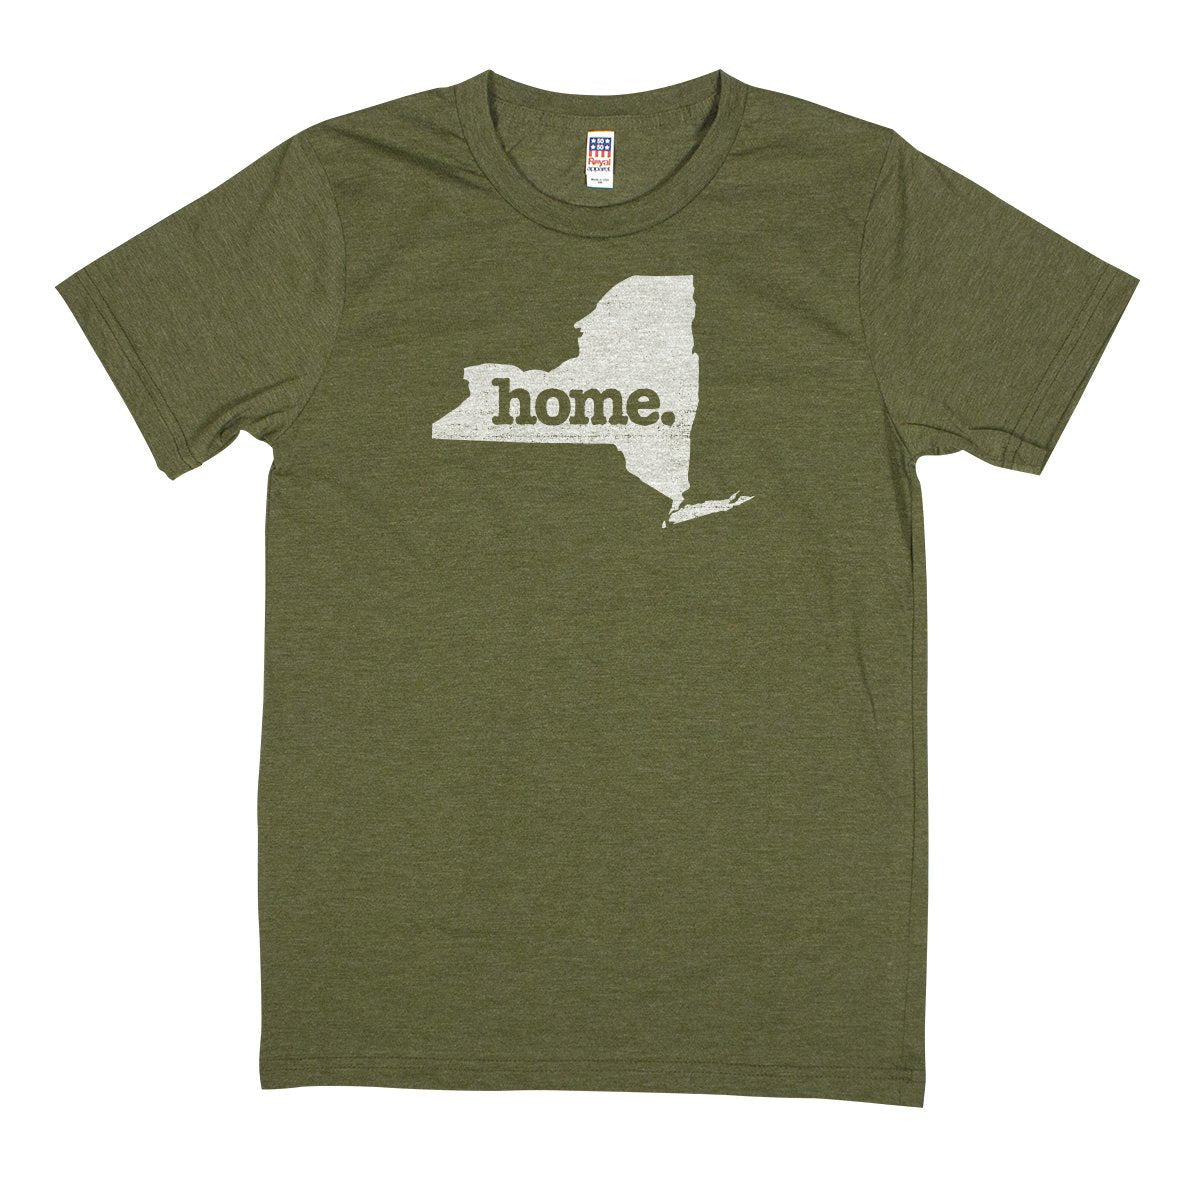 home. Men’s Unisex T-Shirt - North Dakota